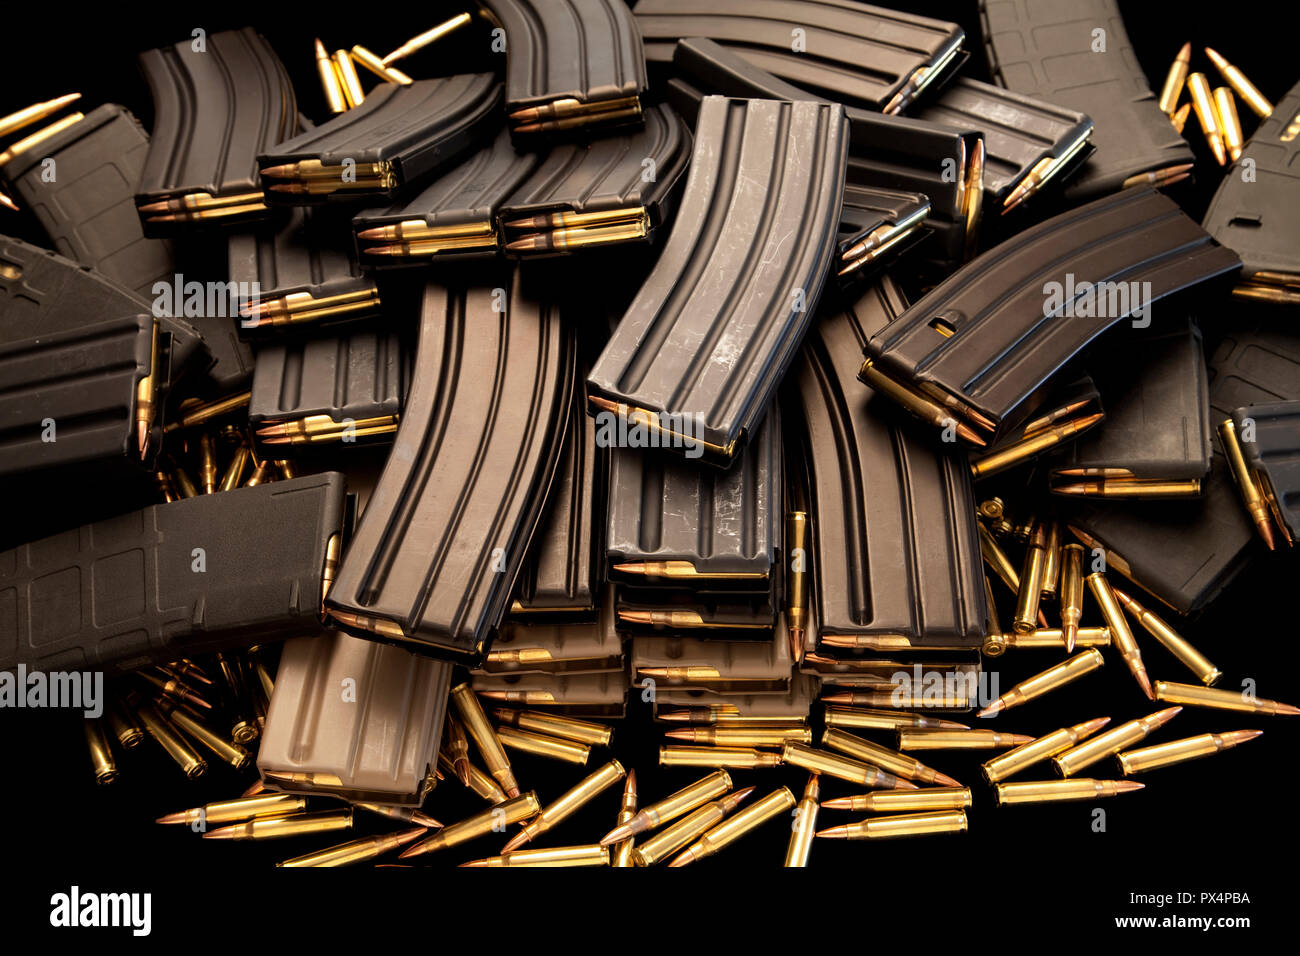 High capacity AR-15 ammunition magazines. Stock Photo